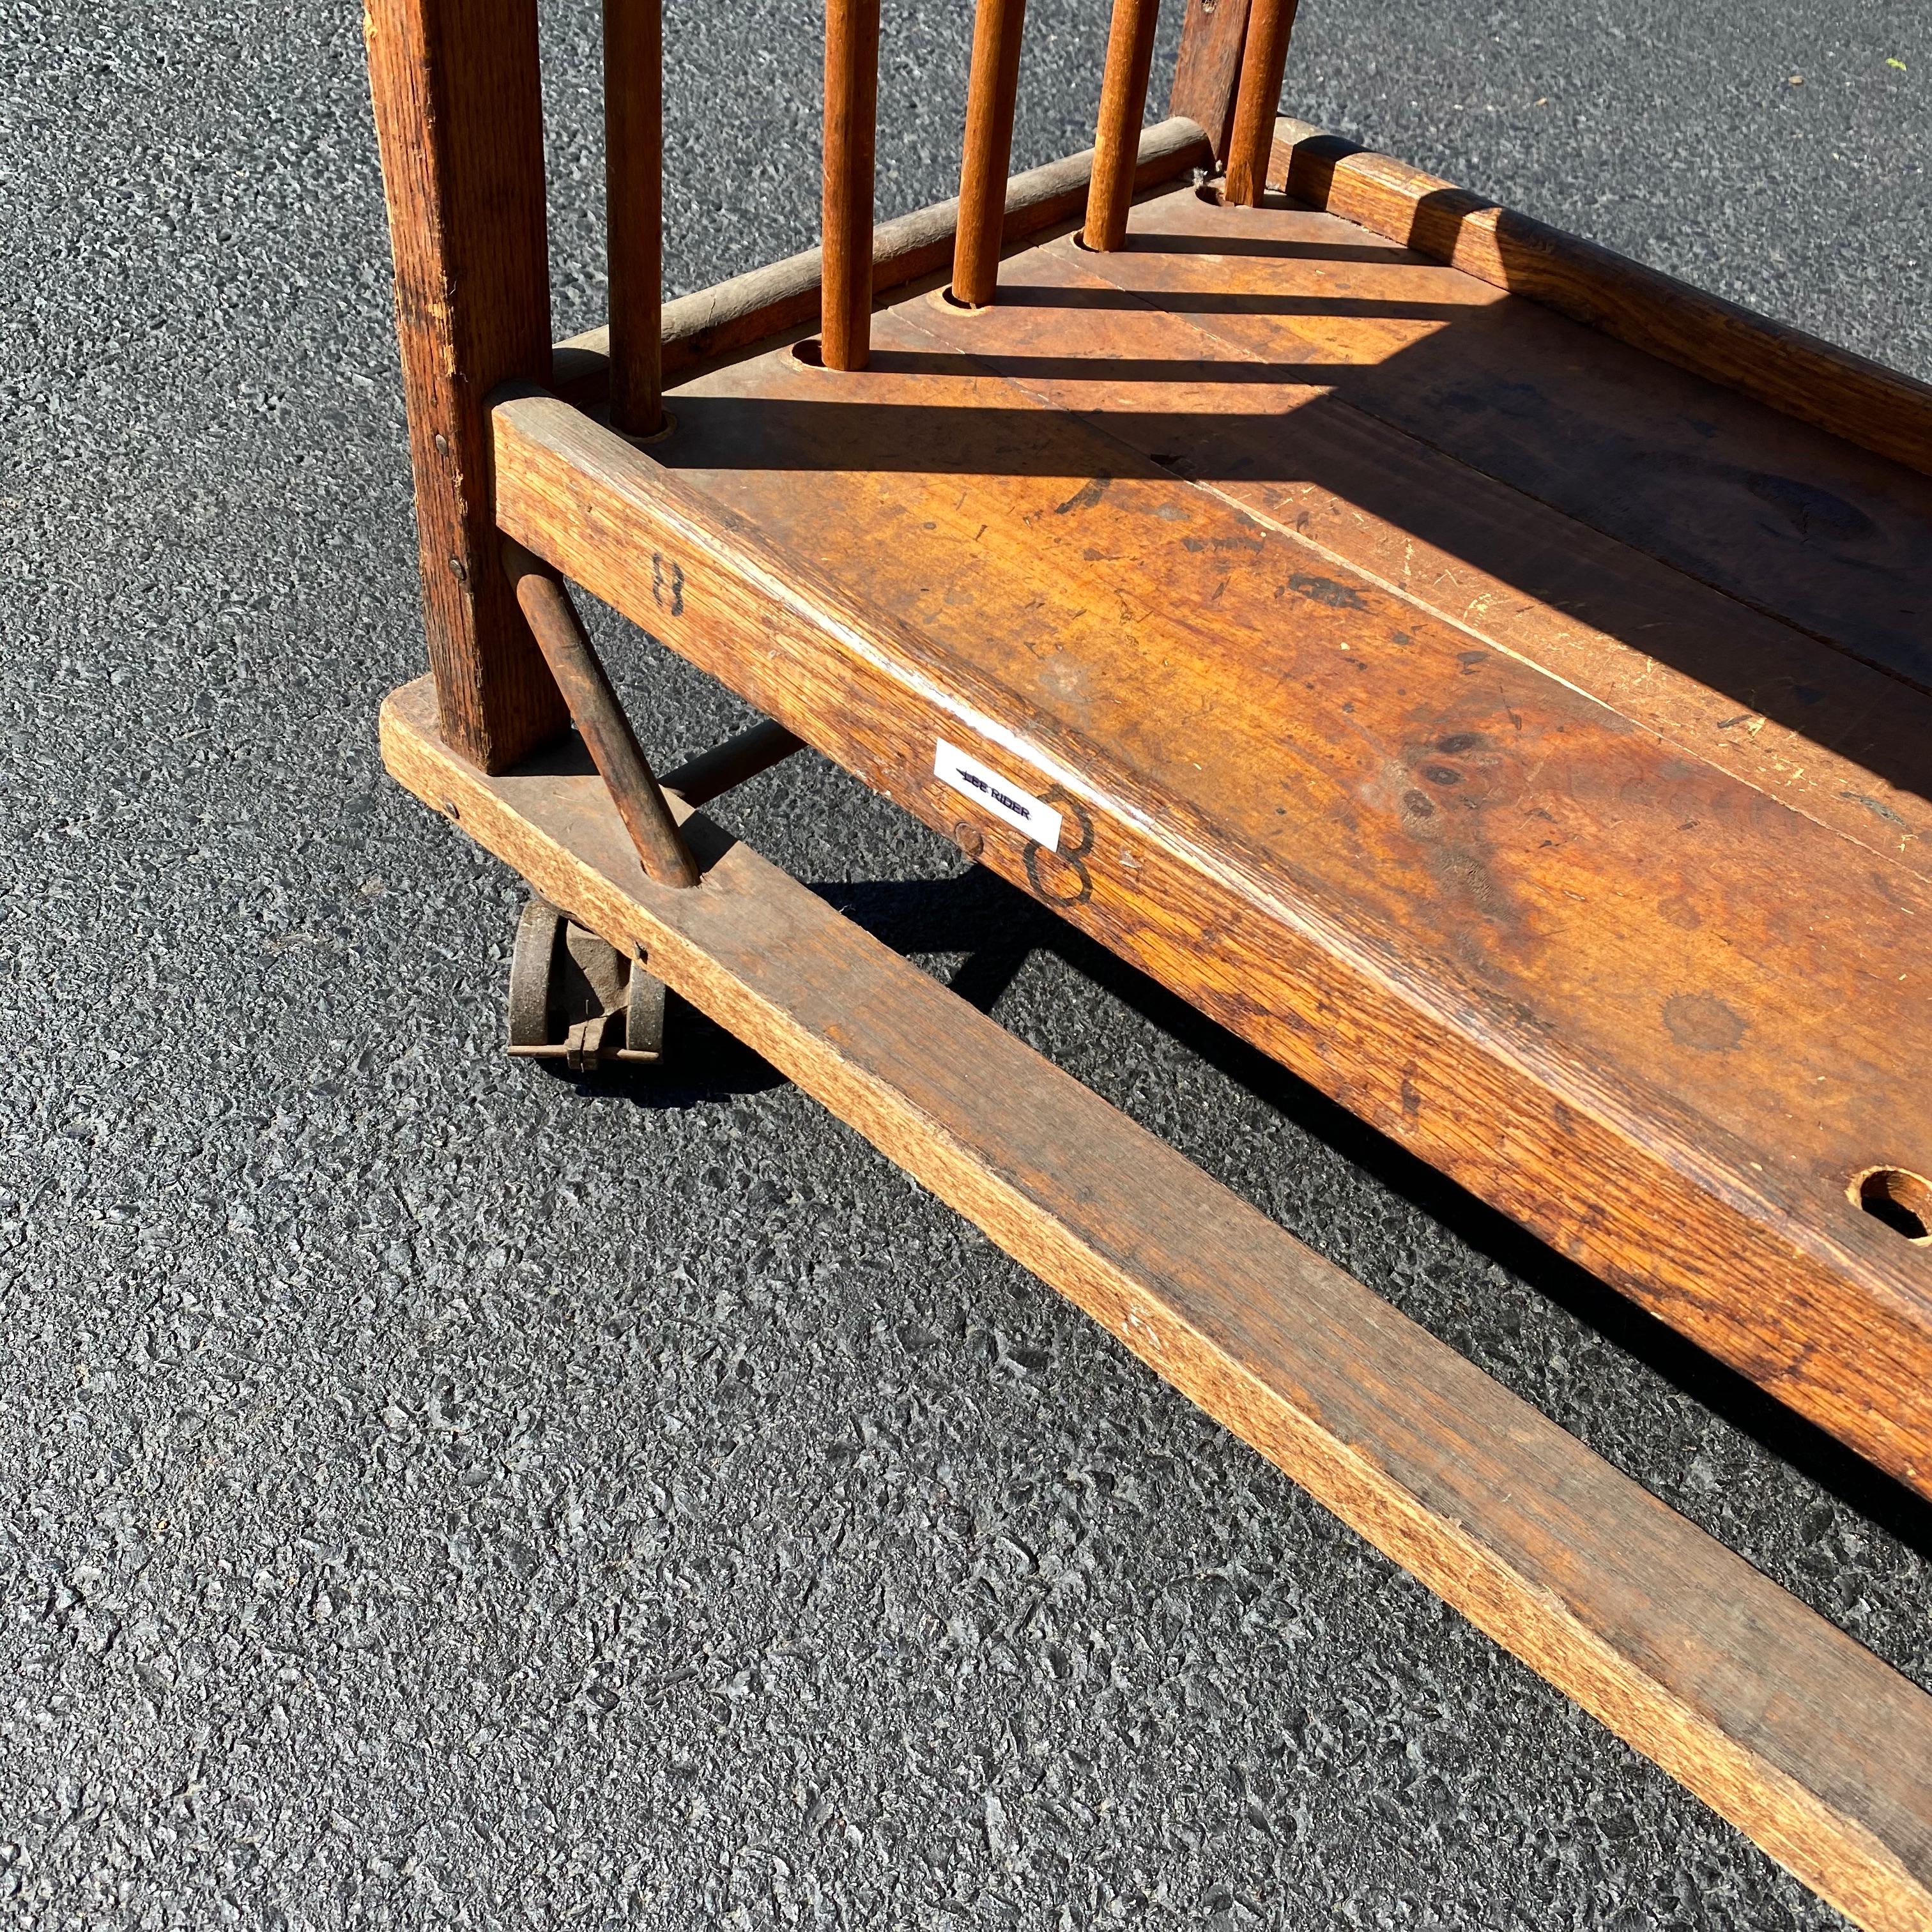 North American American 1930s Wooden Shelf, Cart or Bread Rack on Industrial Iron Wheels